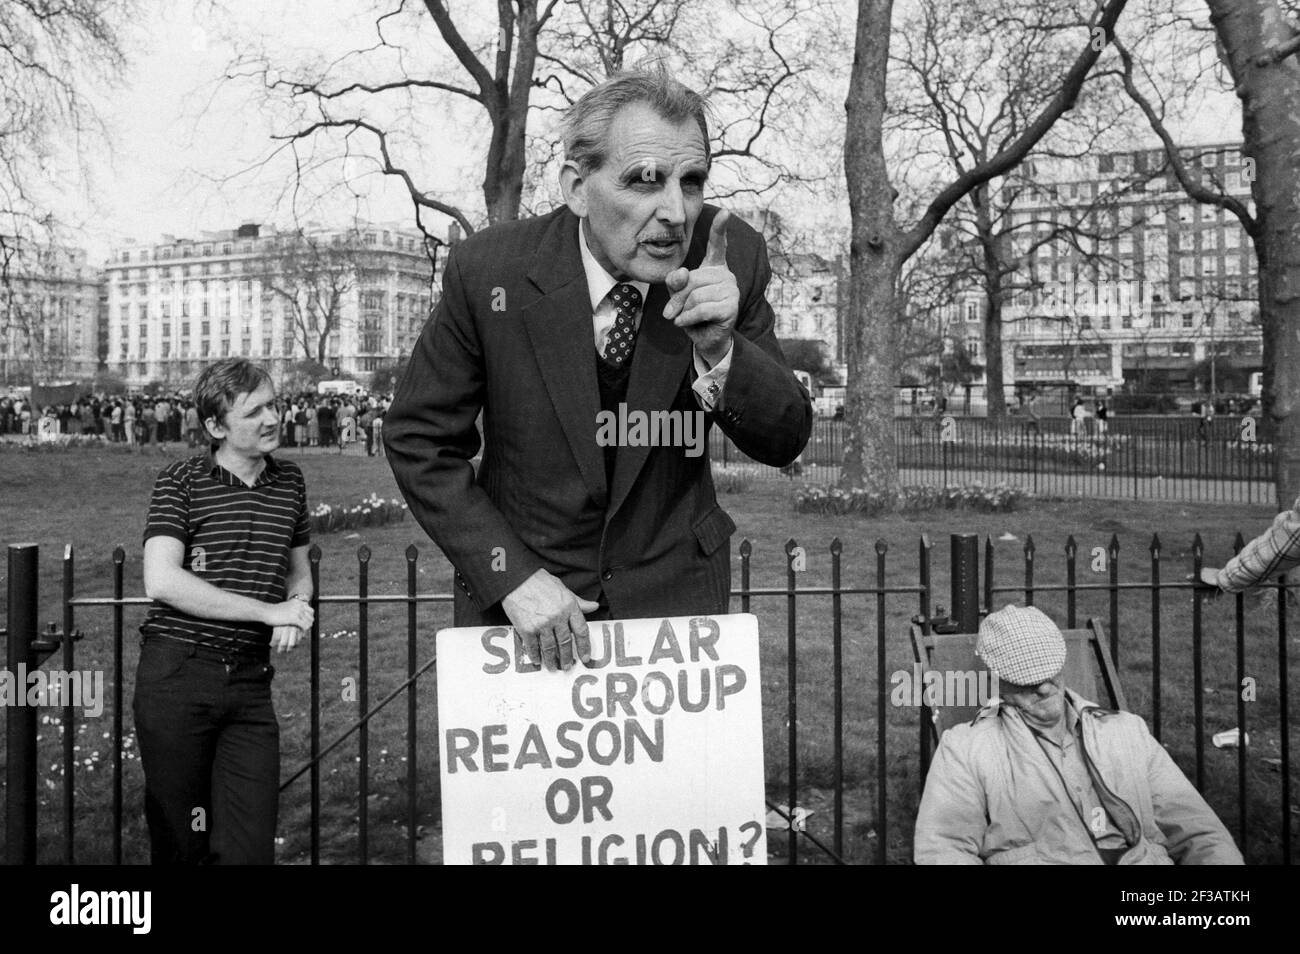 Älterer Mann bei Speakers Corner im Hyde Park London England Großbritannien trägt säkulare Gruppe Vernunft oder Religion? Plakat fotografiert im Jahr 1984. Stockfoto